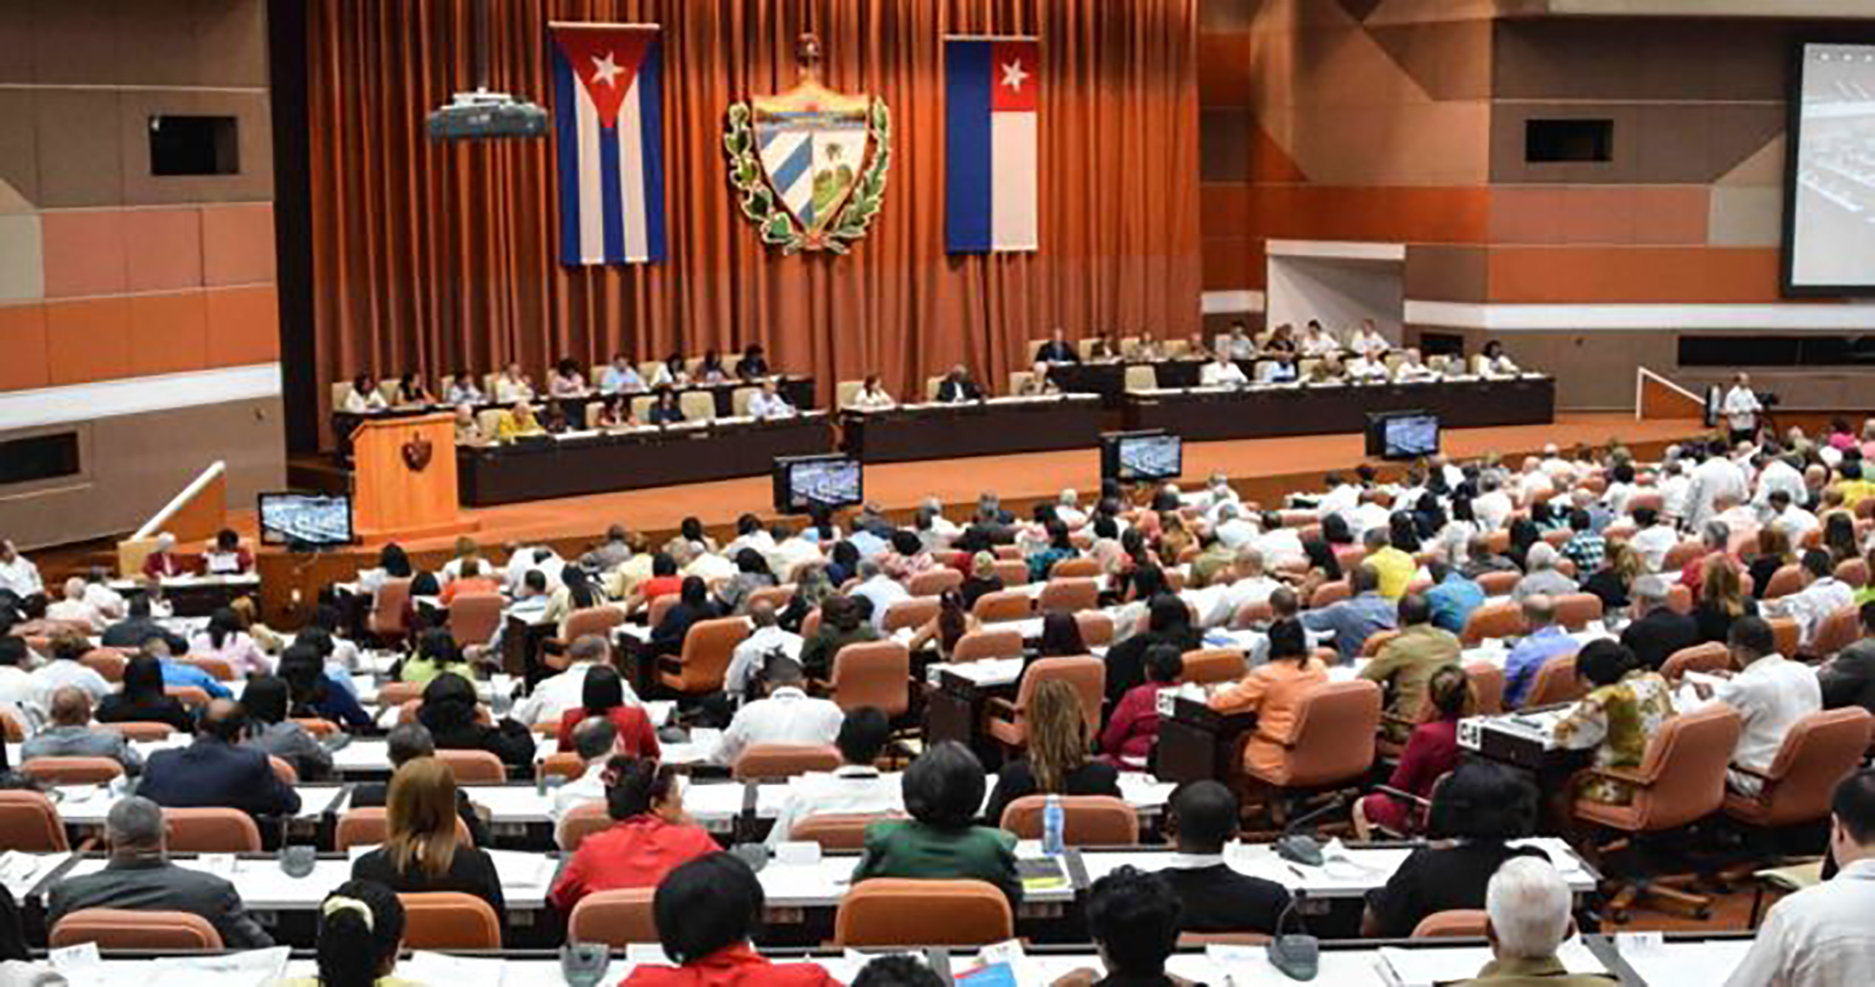 Communist-run Cuba to recognize private property in new constitution